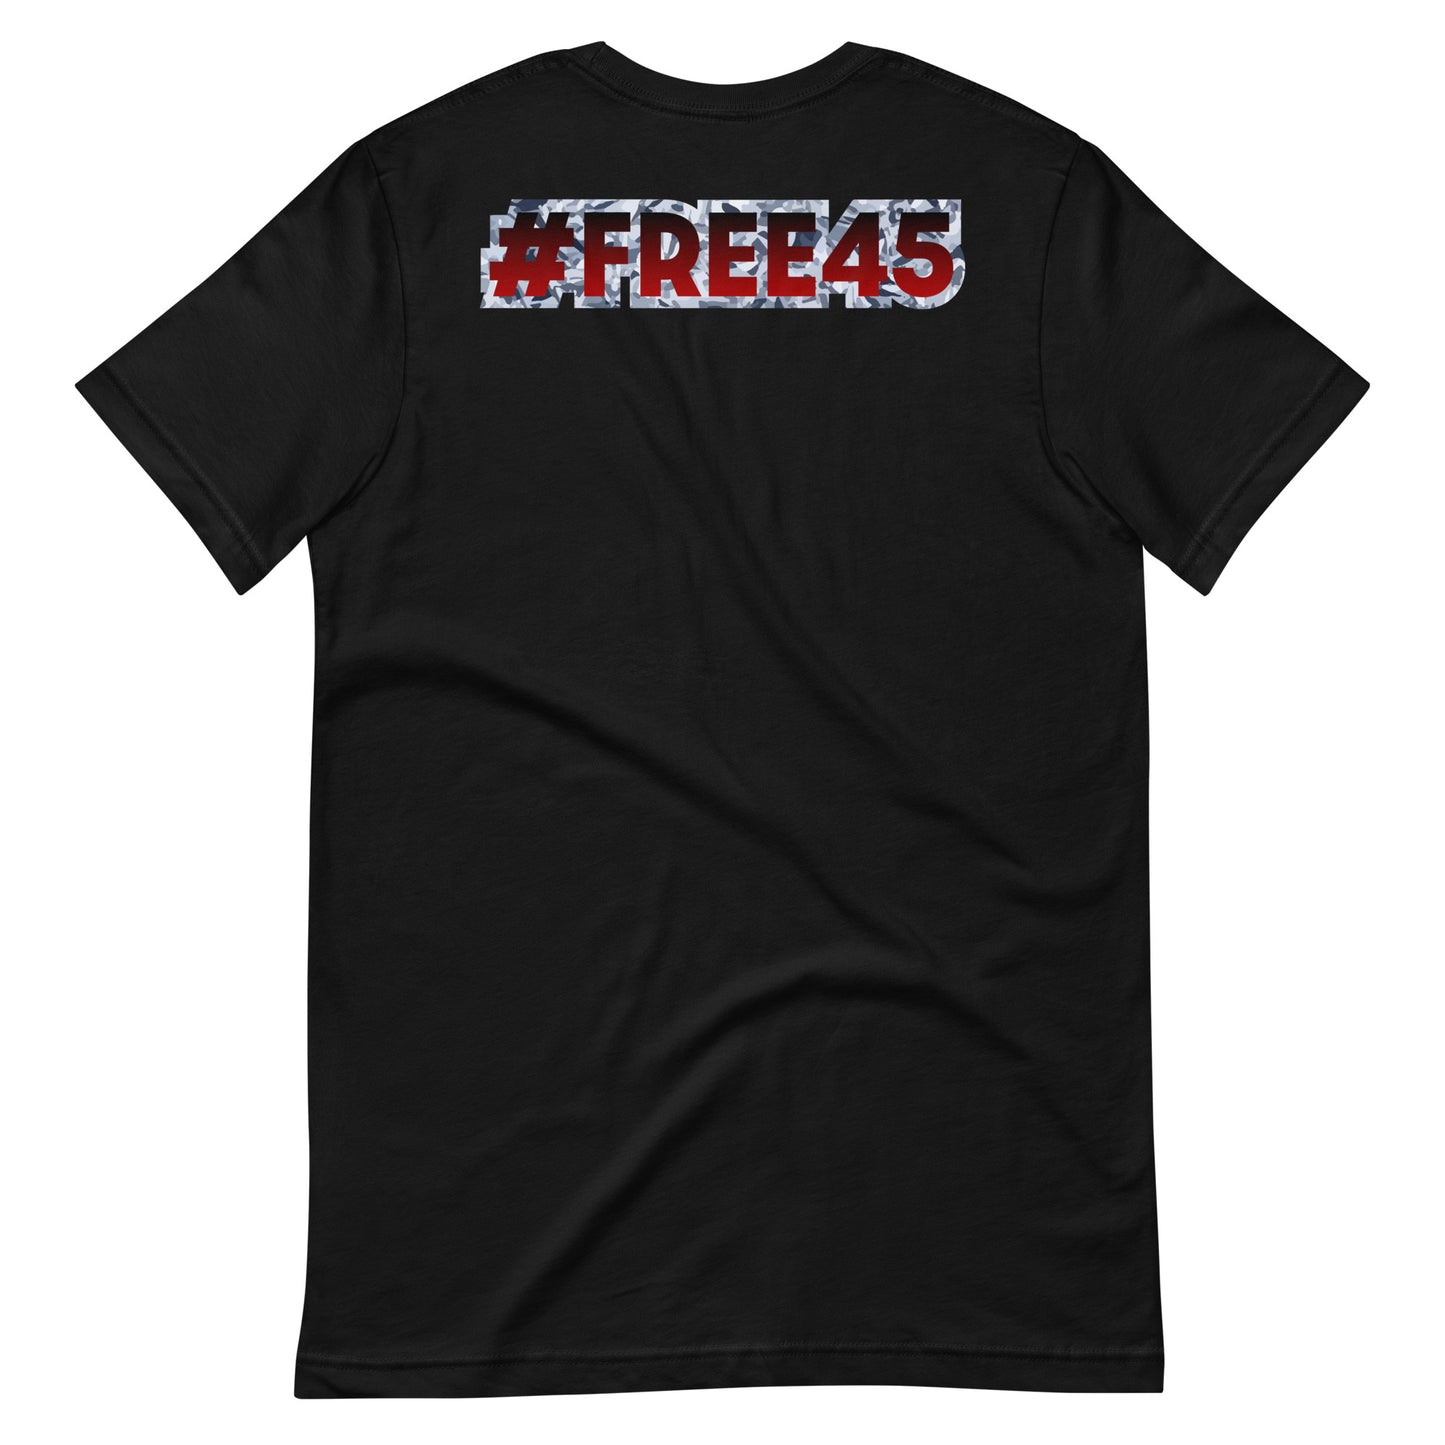 FREE45 graphic t-shirt